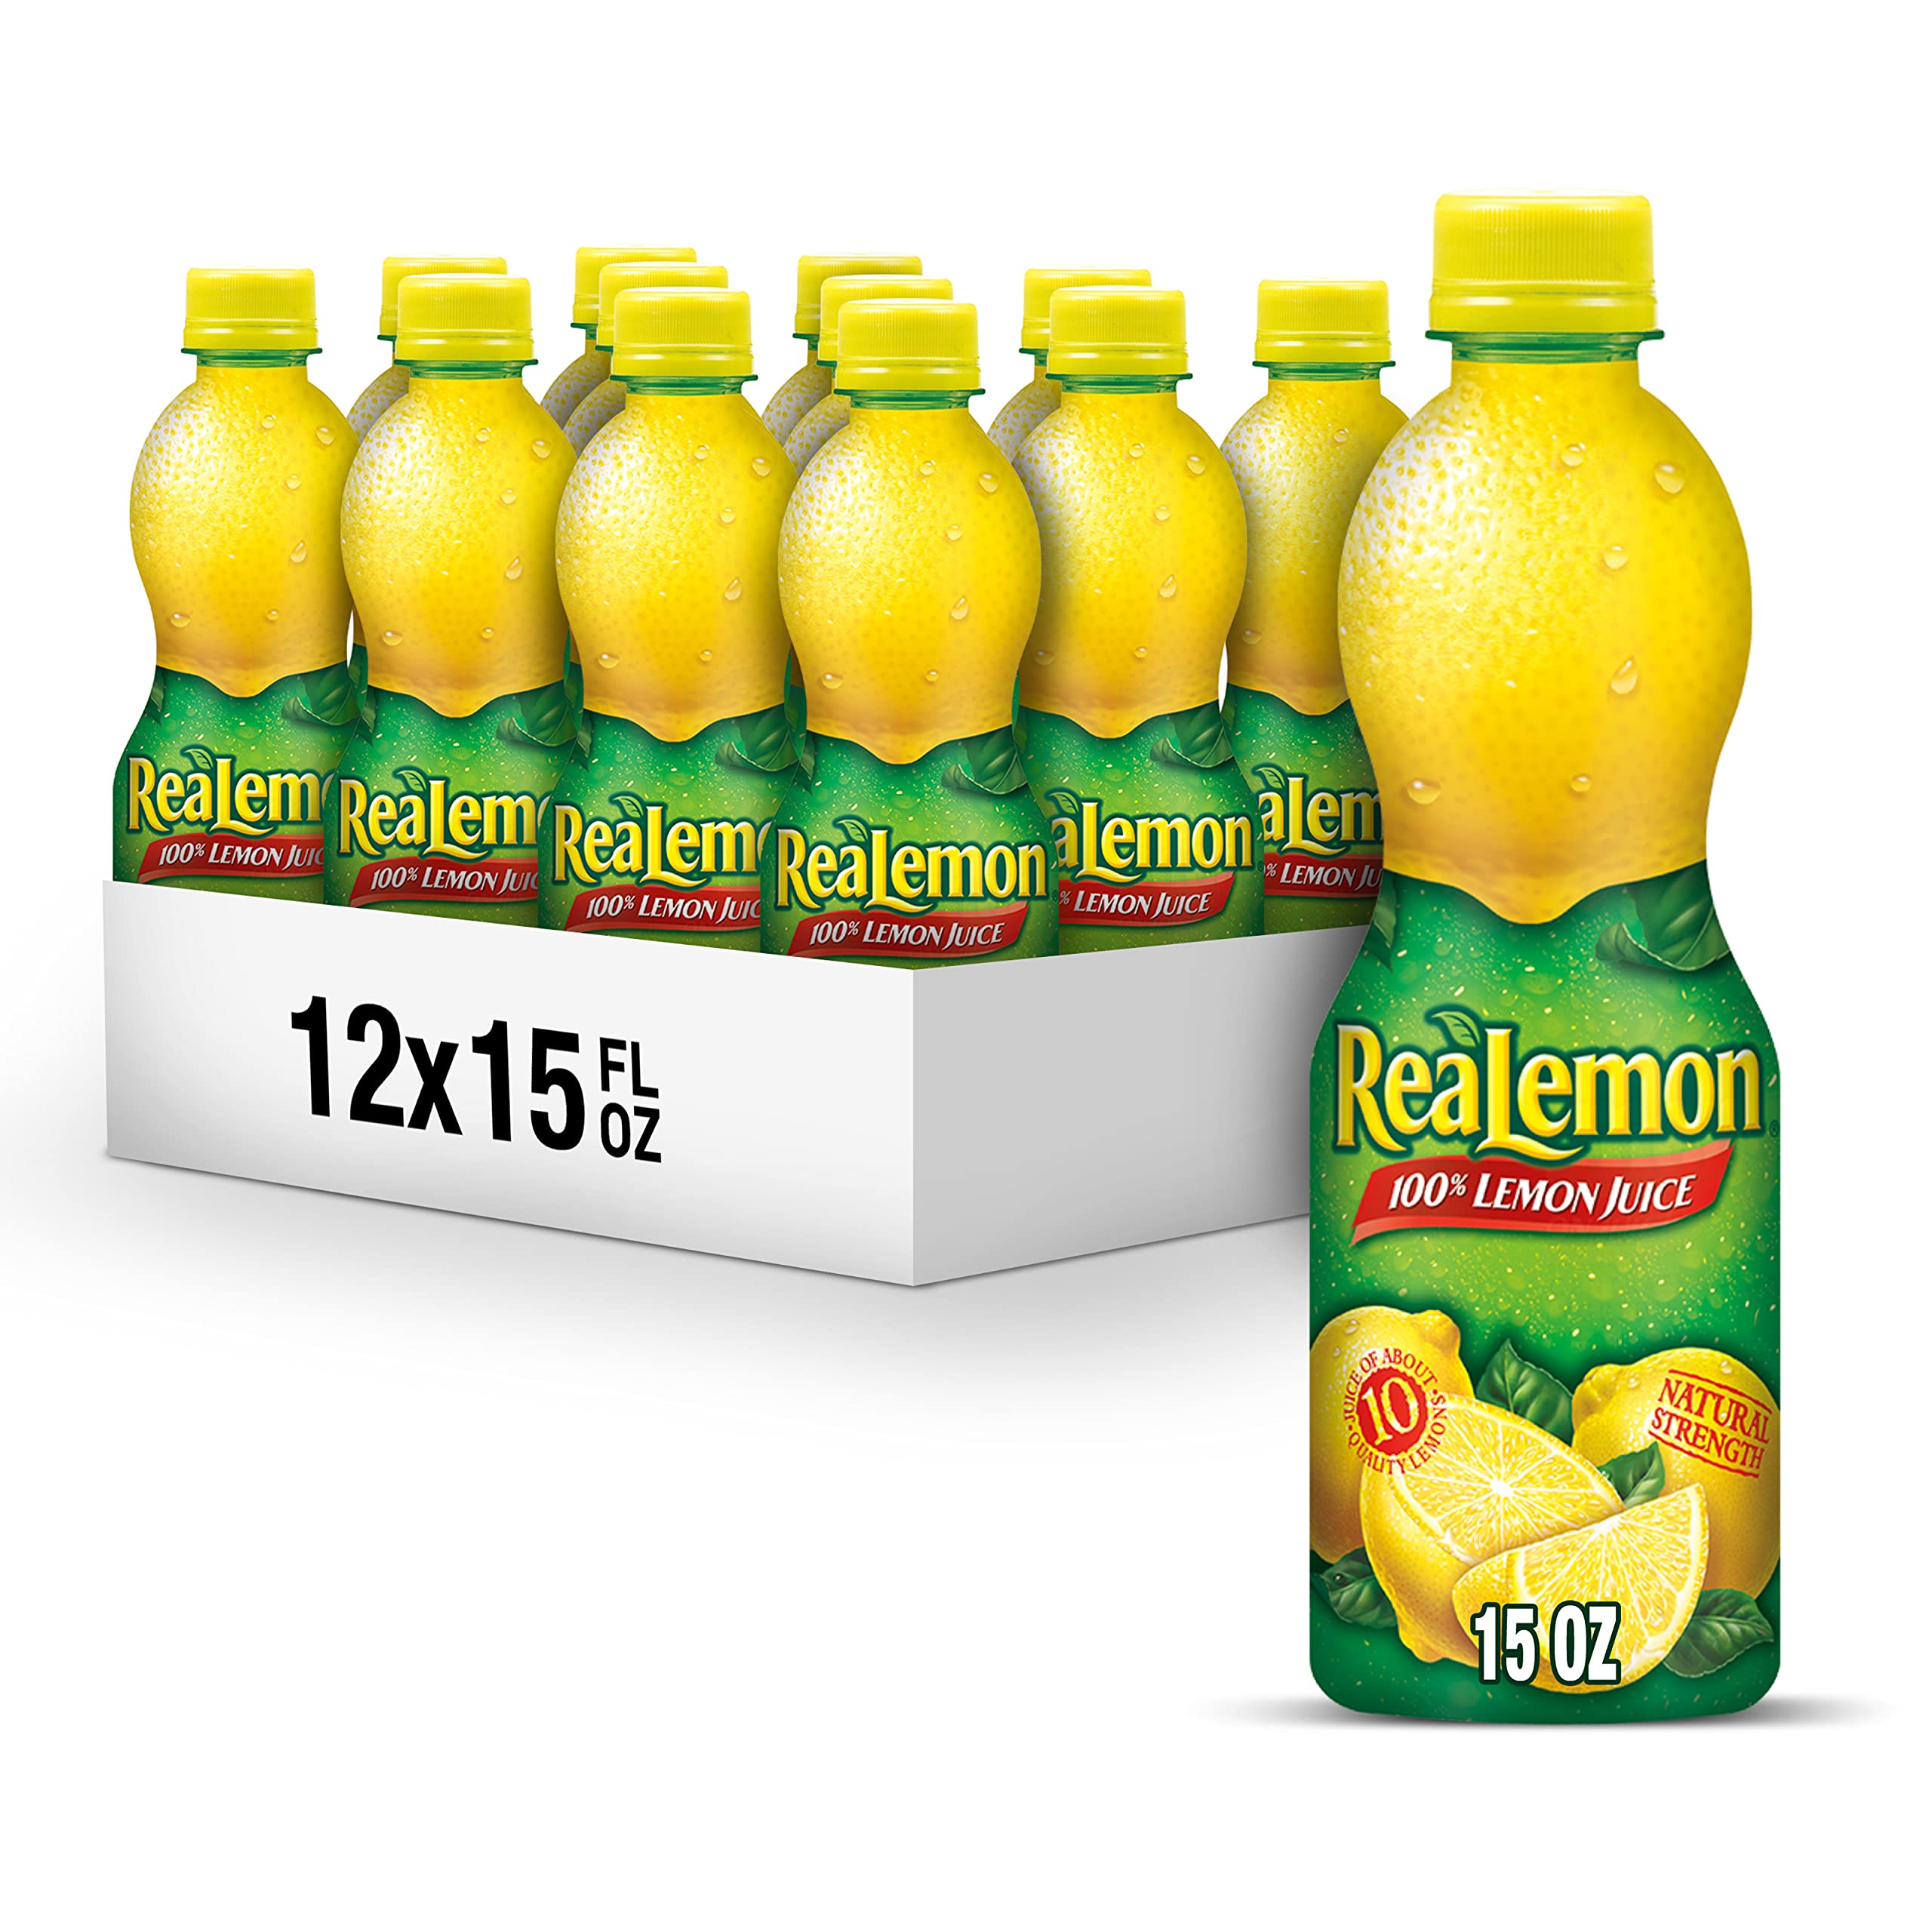 12-Pack 15-Oz ReaLemon 100% Lemon Juice $12.32 + Free Shipping w/ Prime or on orders over $35